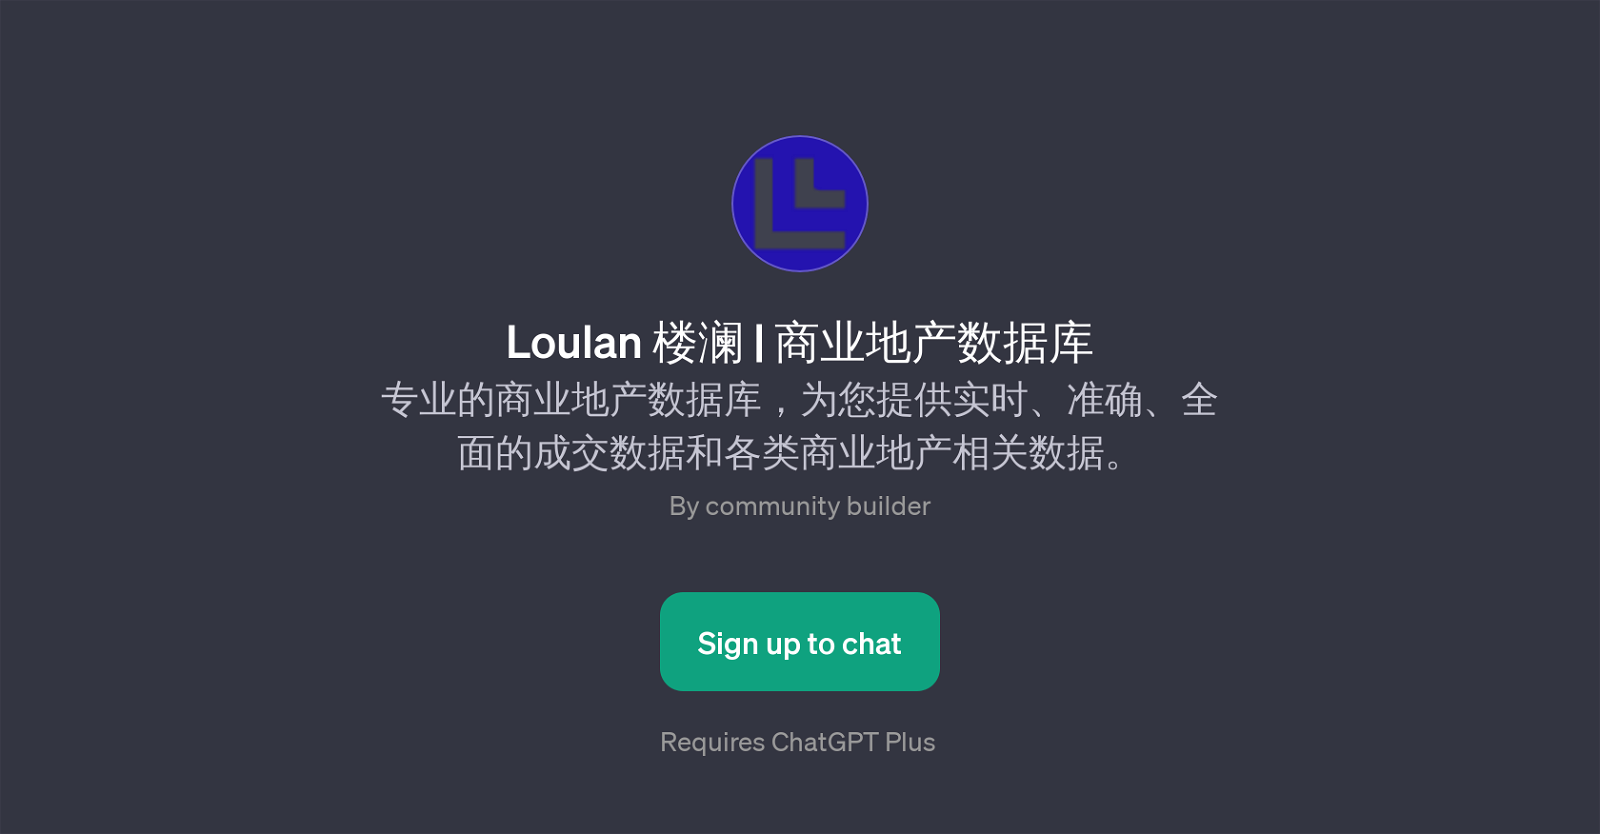 Loulan website